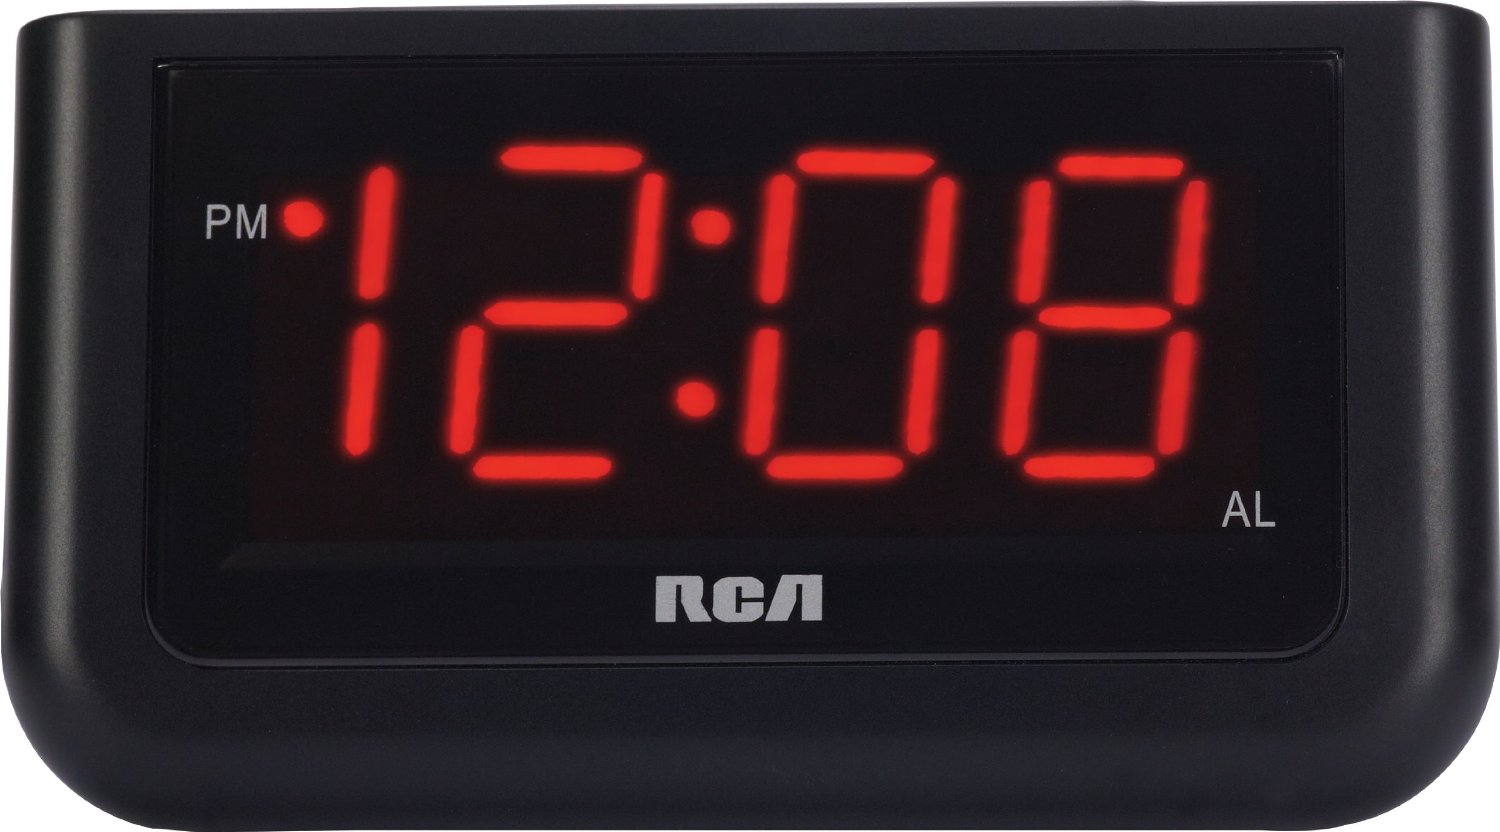 RCA Digital Alarm Clock with Large 1.4" Display